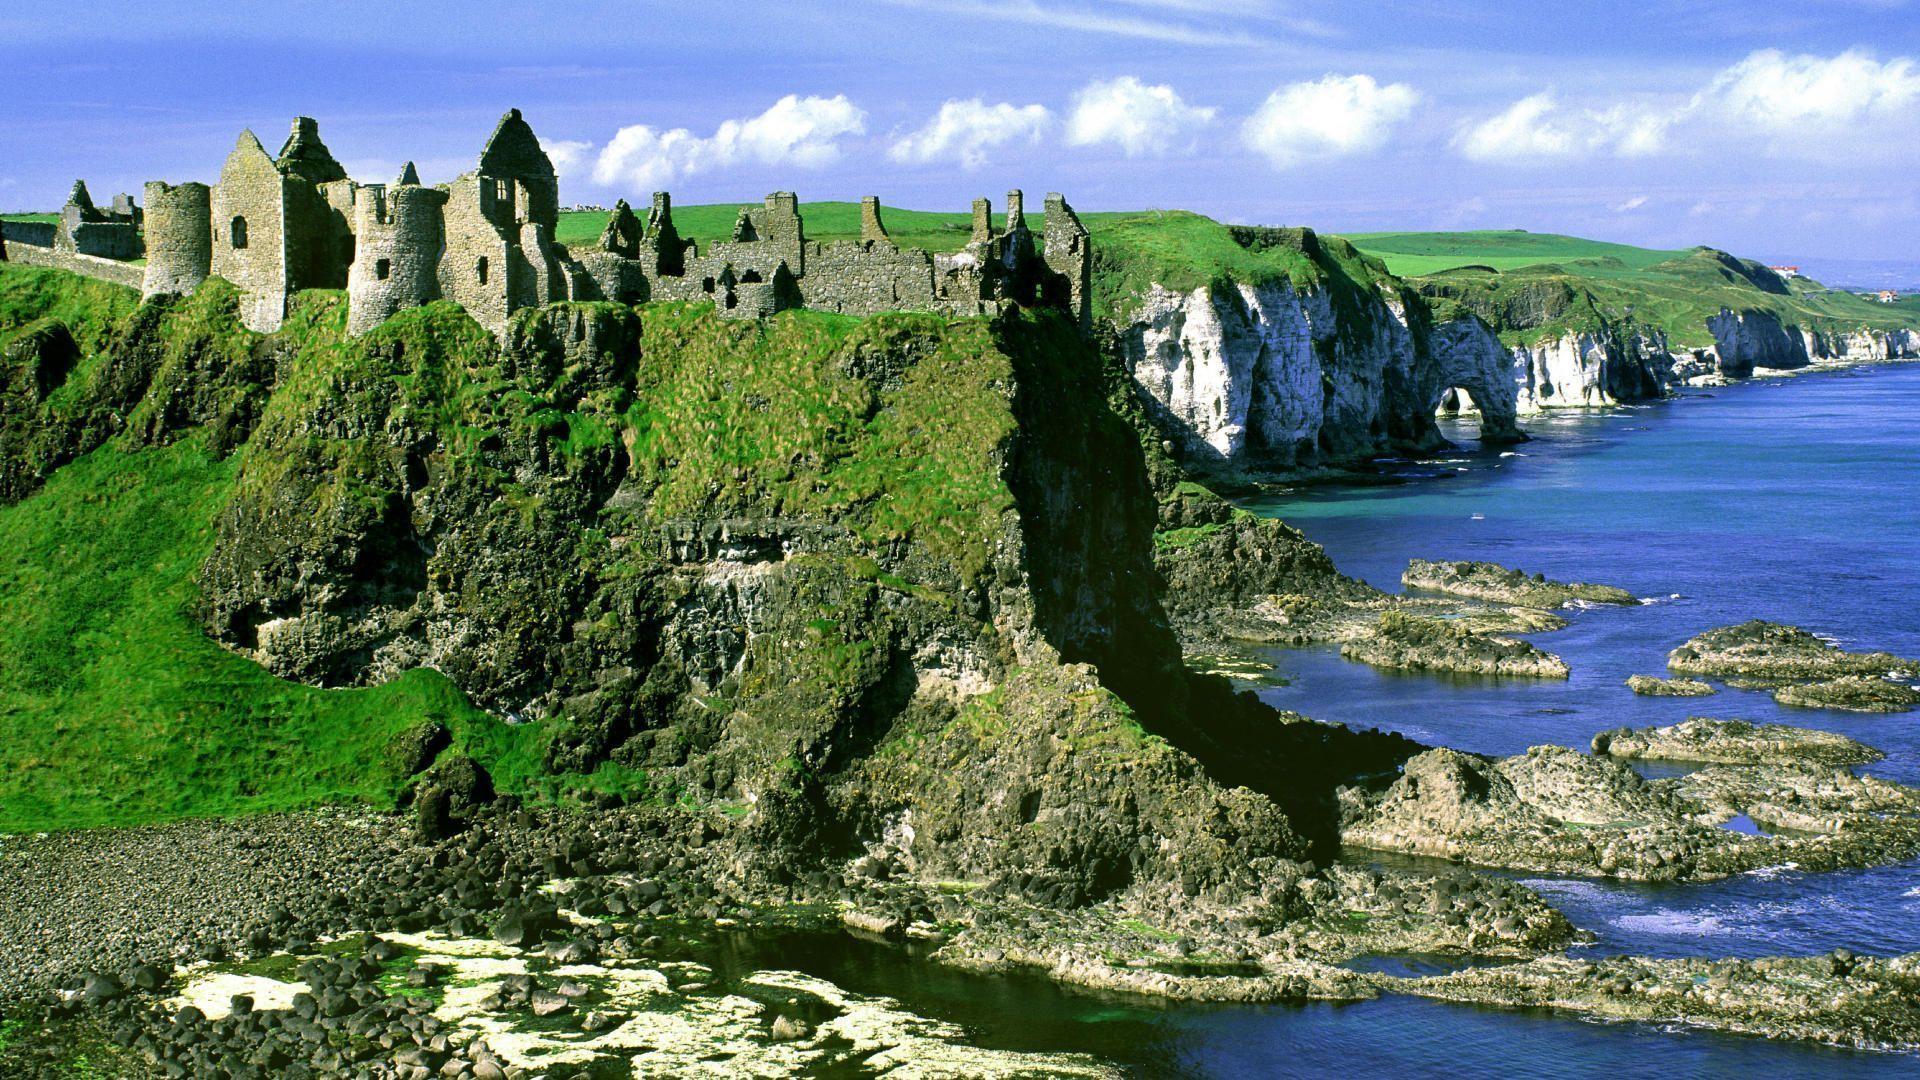 Wallpaper Desktop Ireland Landscape 1024 X 768 256 Kb Jpeg